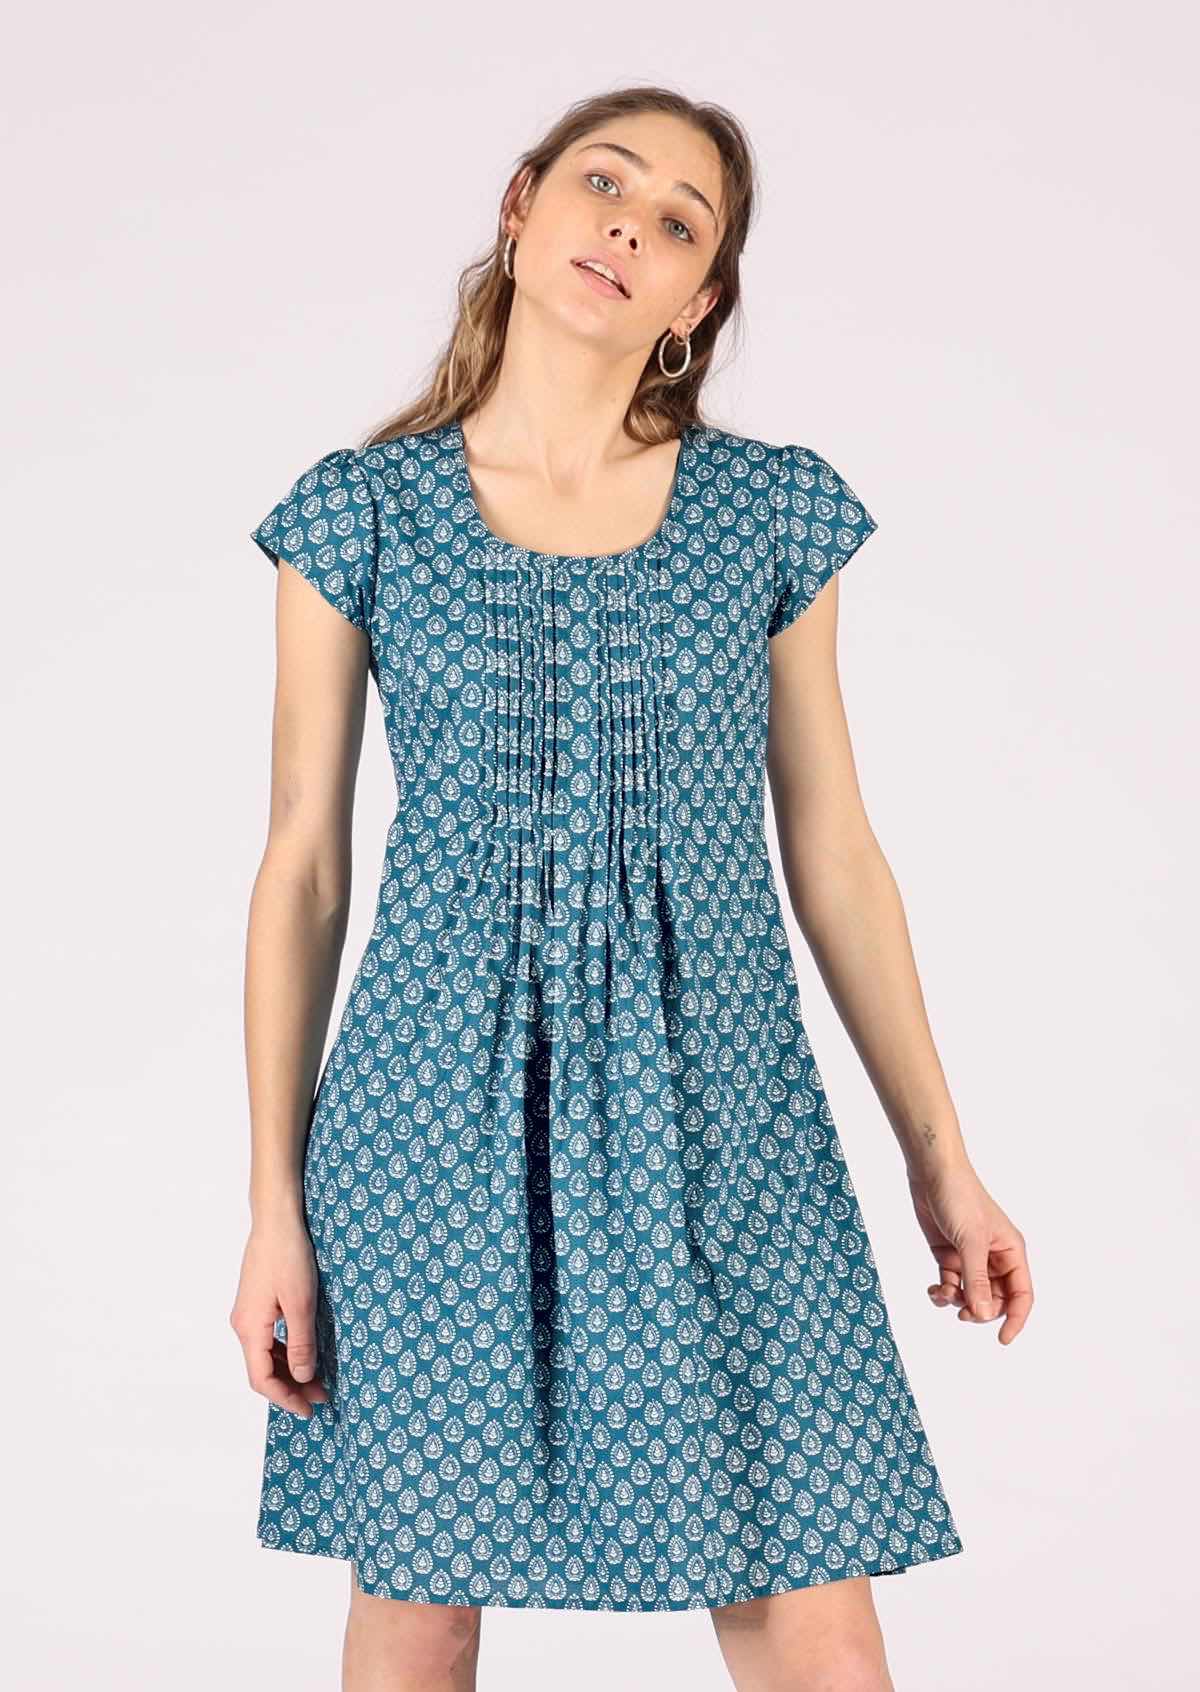 Cotton dress with round neckline and tiny pleats across bodice